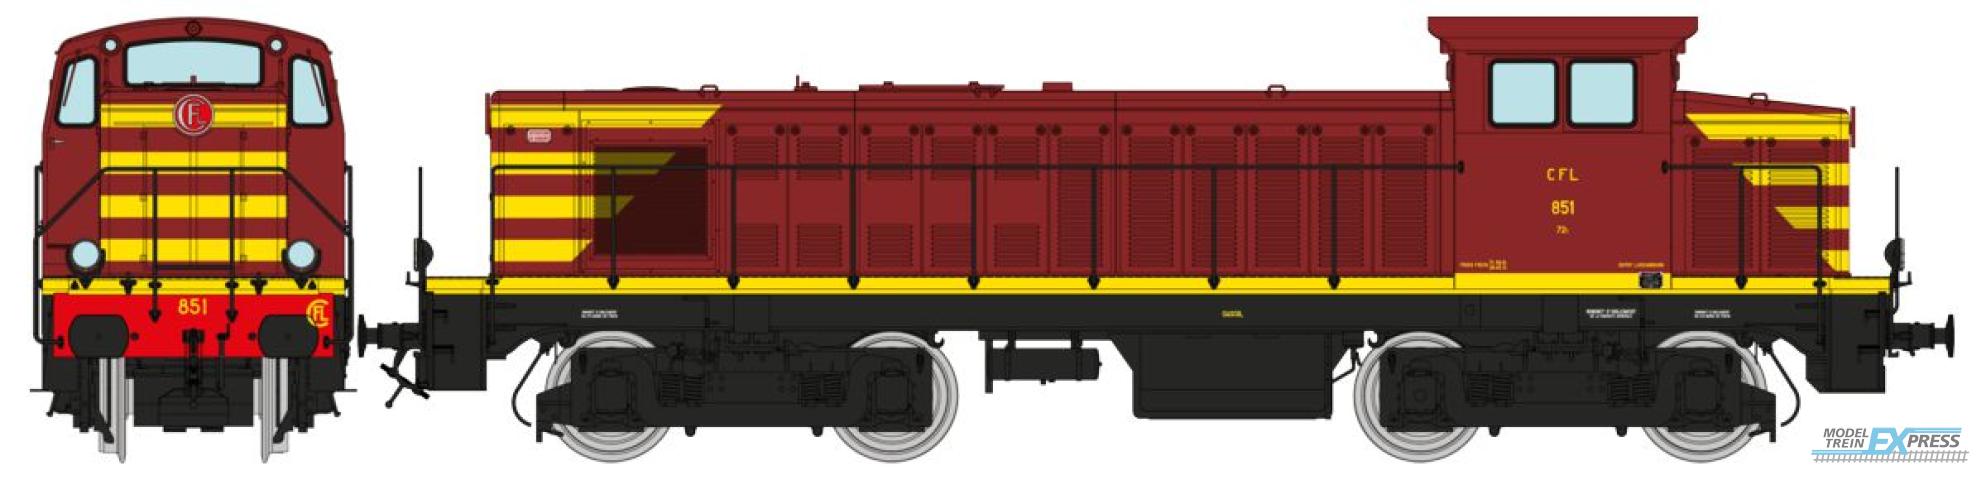 REE models JM-011S Diesel Locomotive 851, Origin Livery, CFL Era III - DCC SOUND